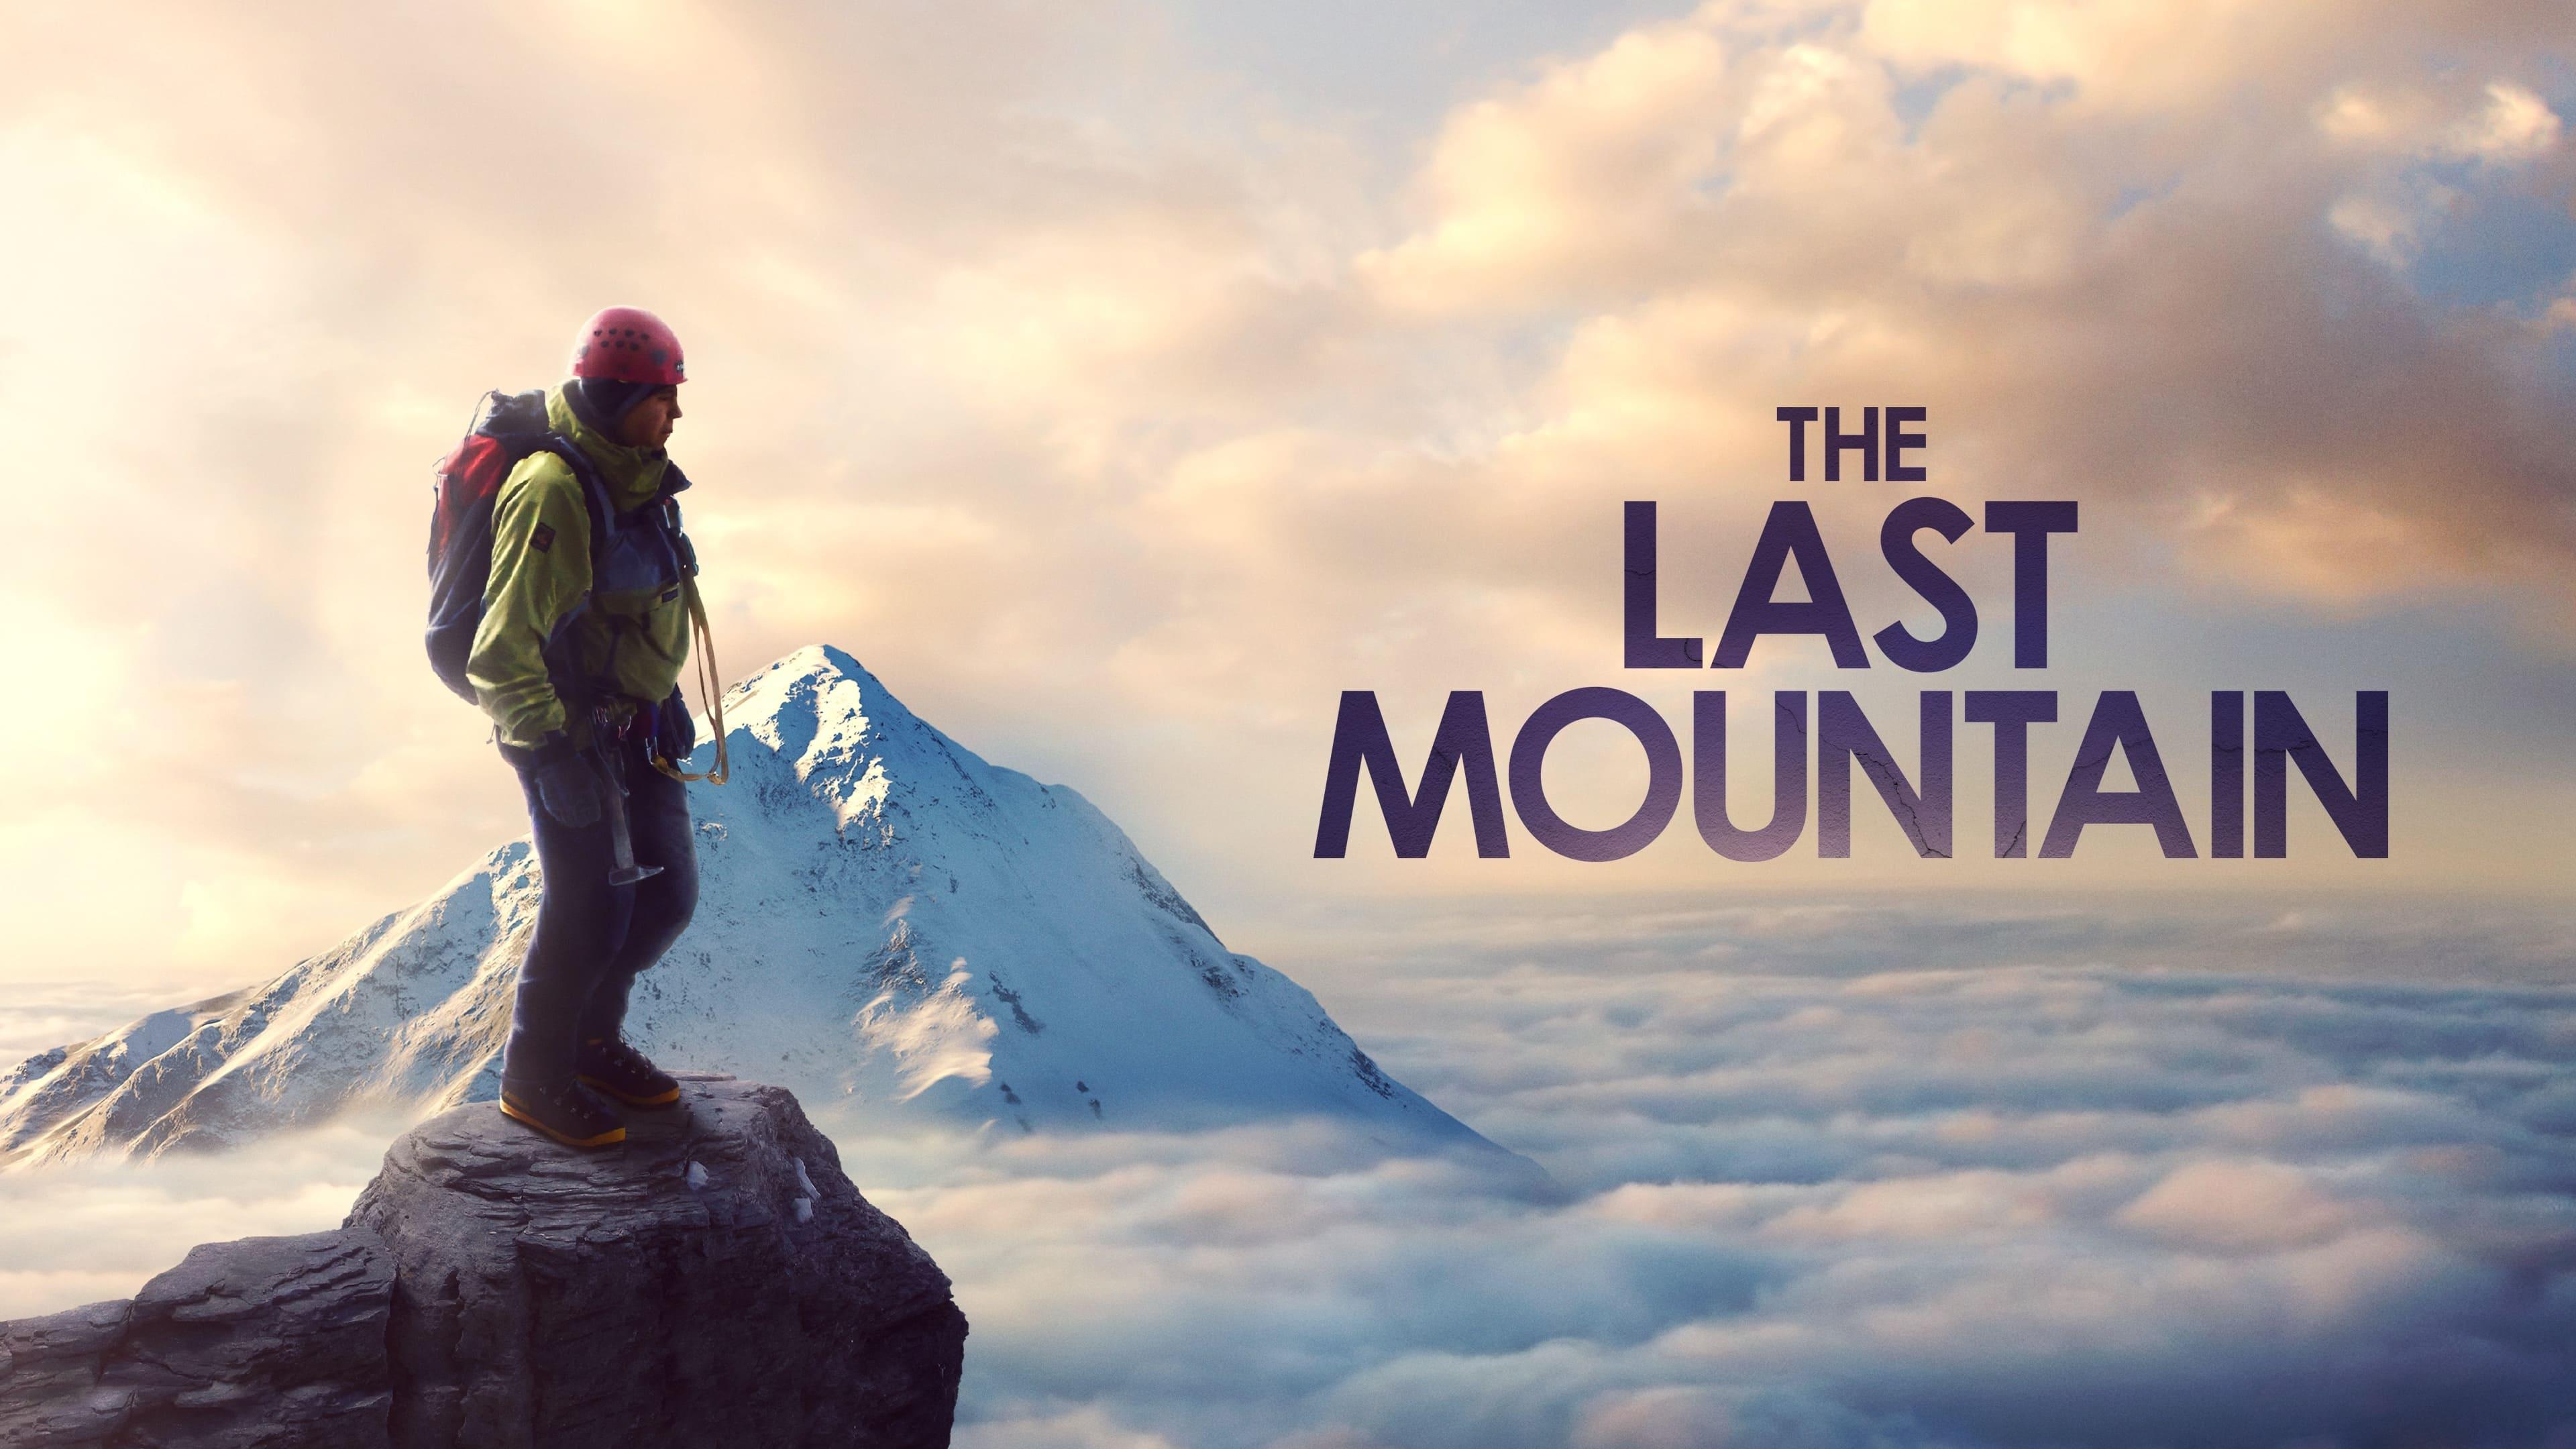 The Last Mountain backdrop